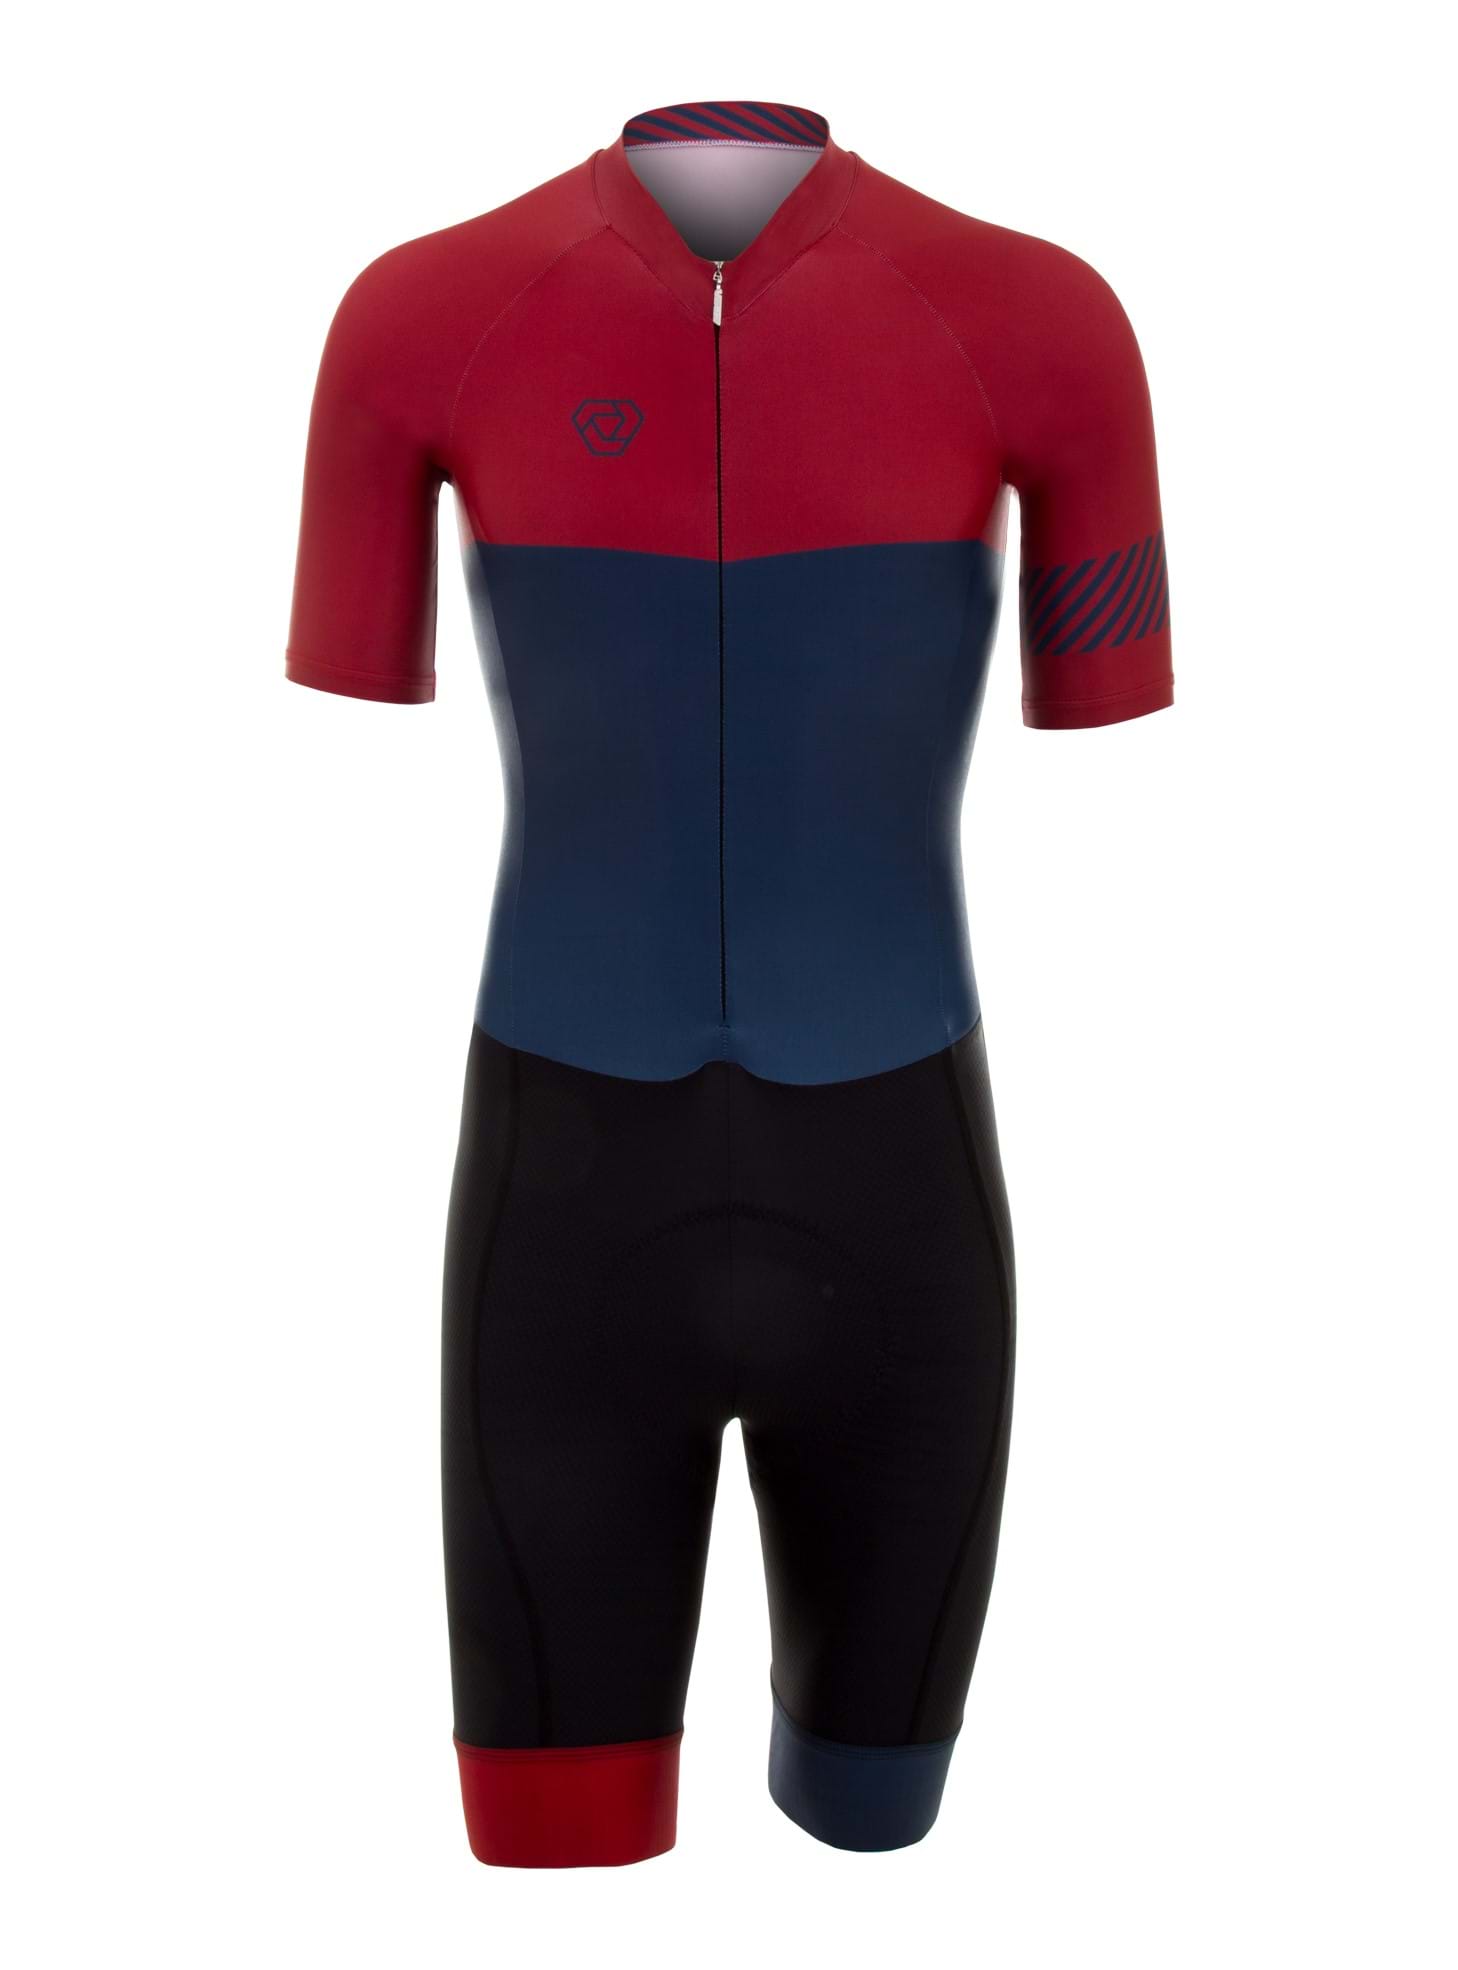 Verge Sport Classic Speedsuit Short Sleeve Cycling Race Skinsuit 3/4 Zipper